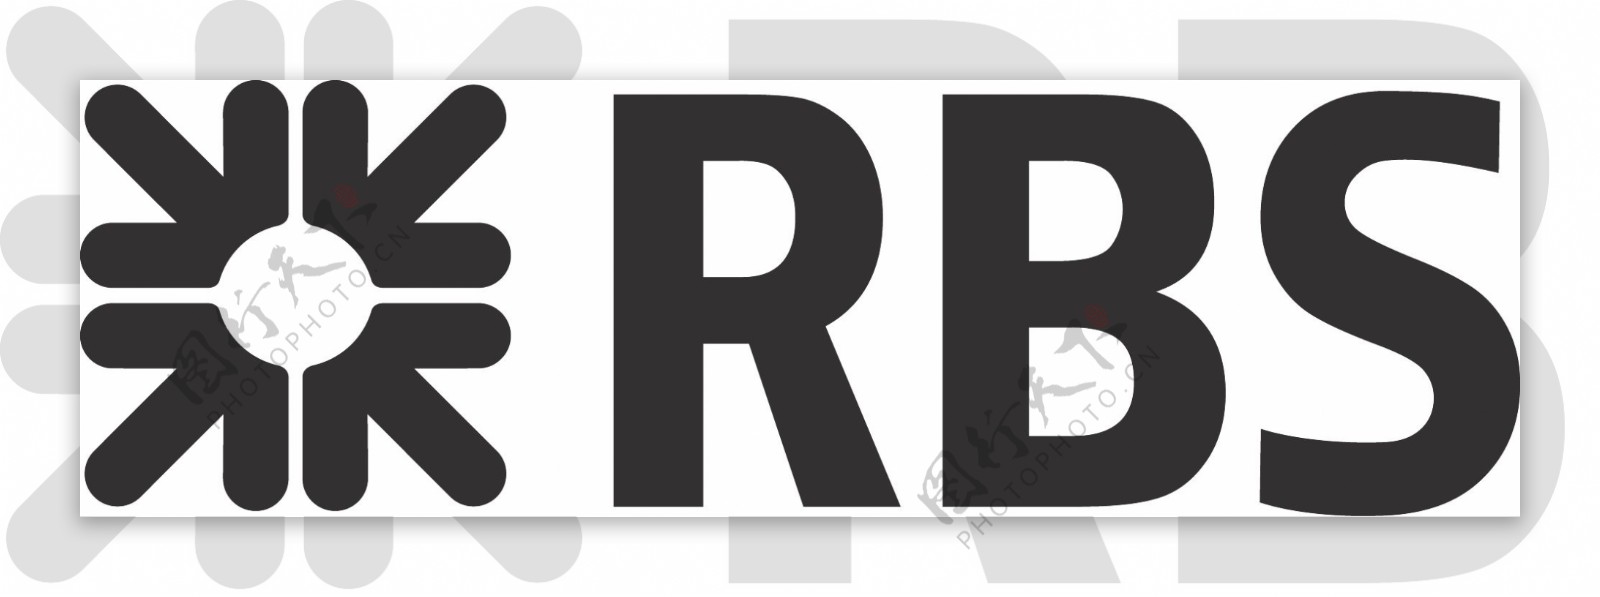 RBS银行logo图片